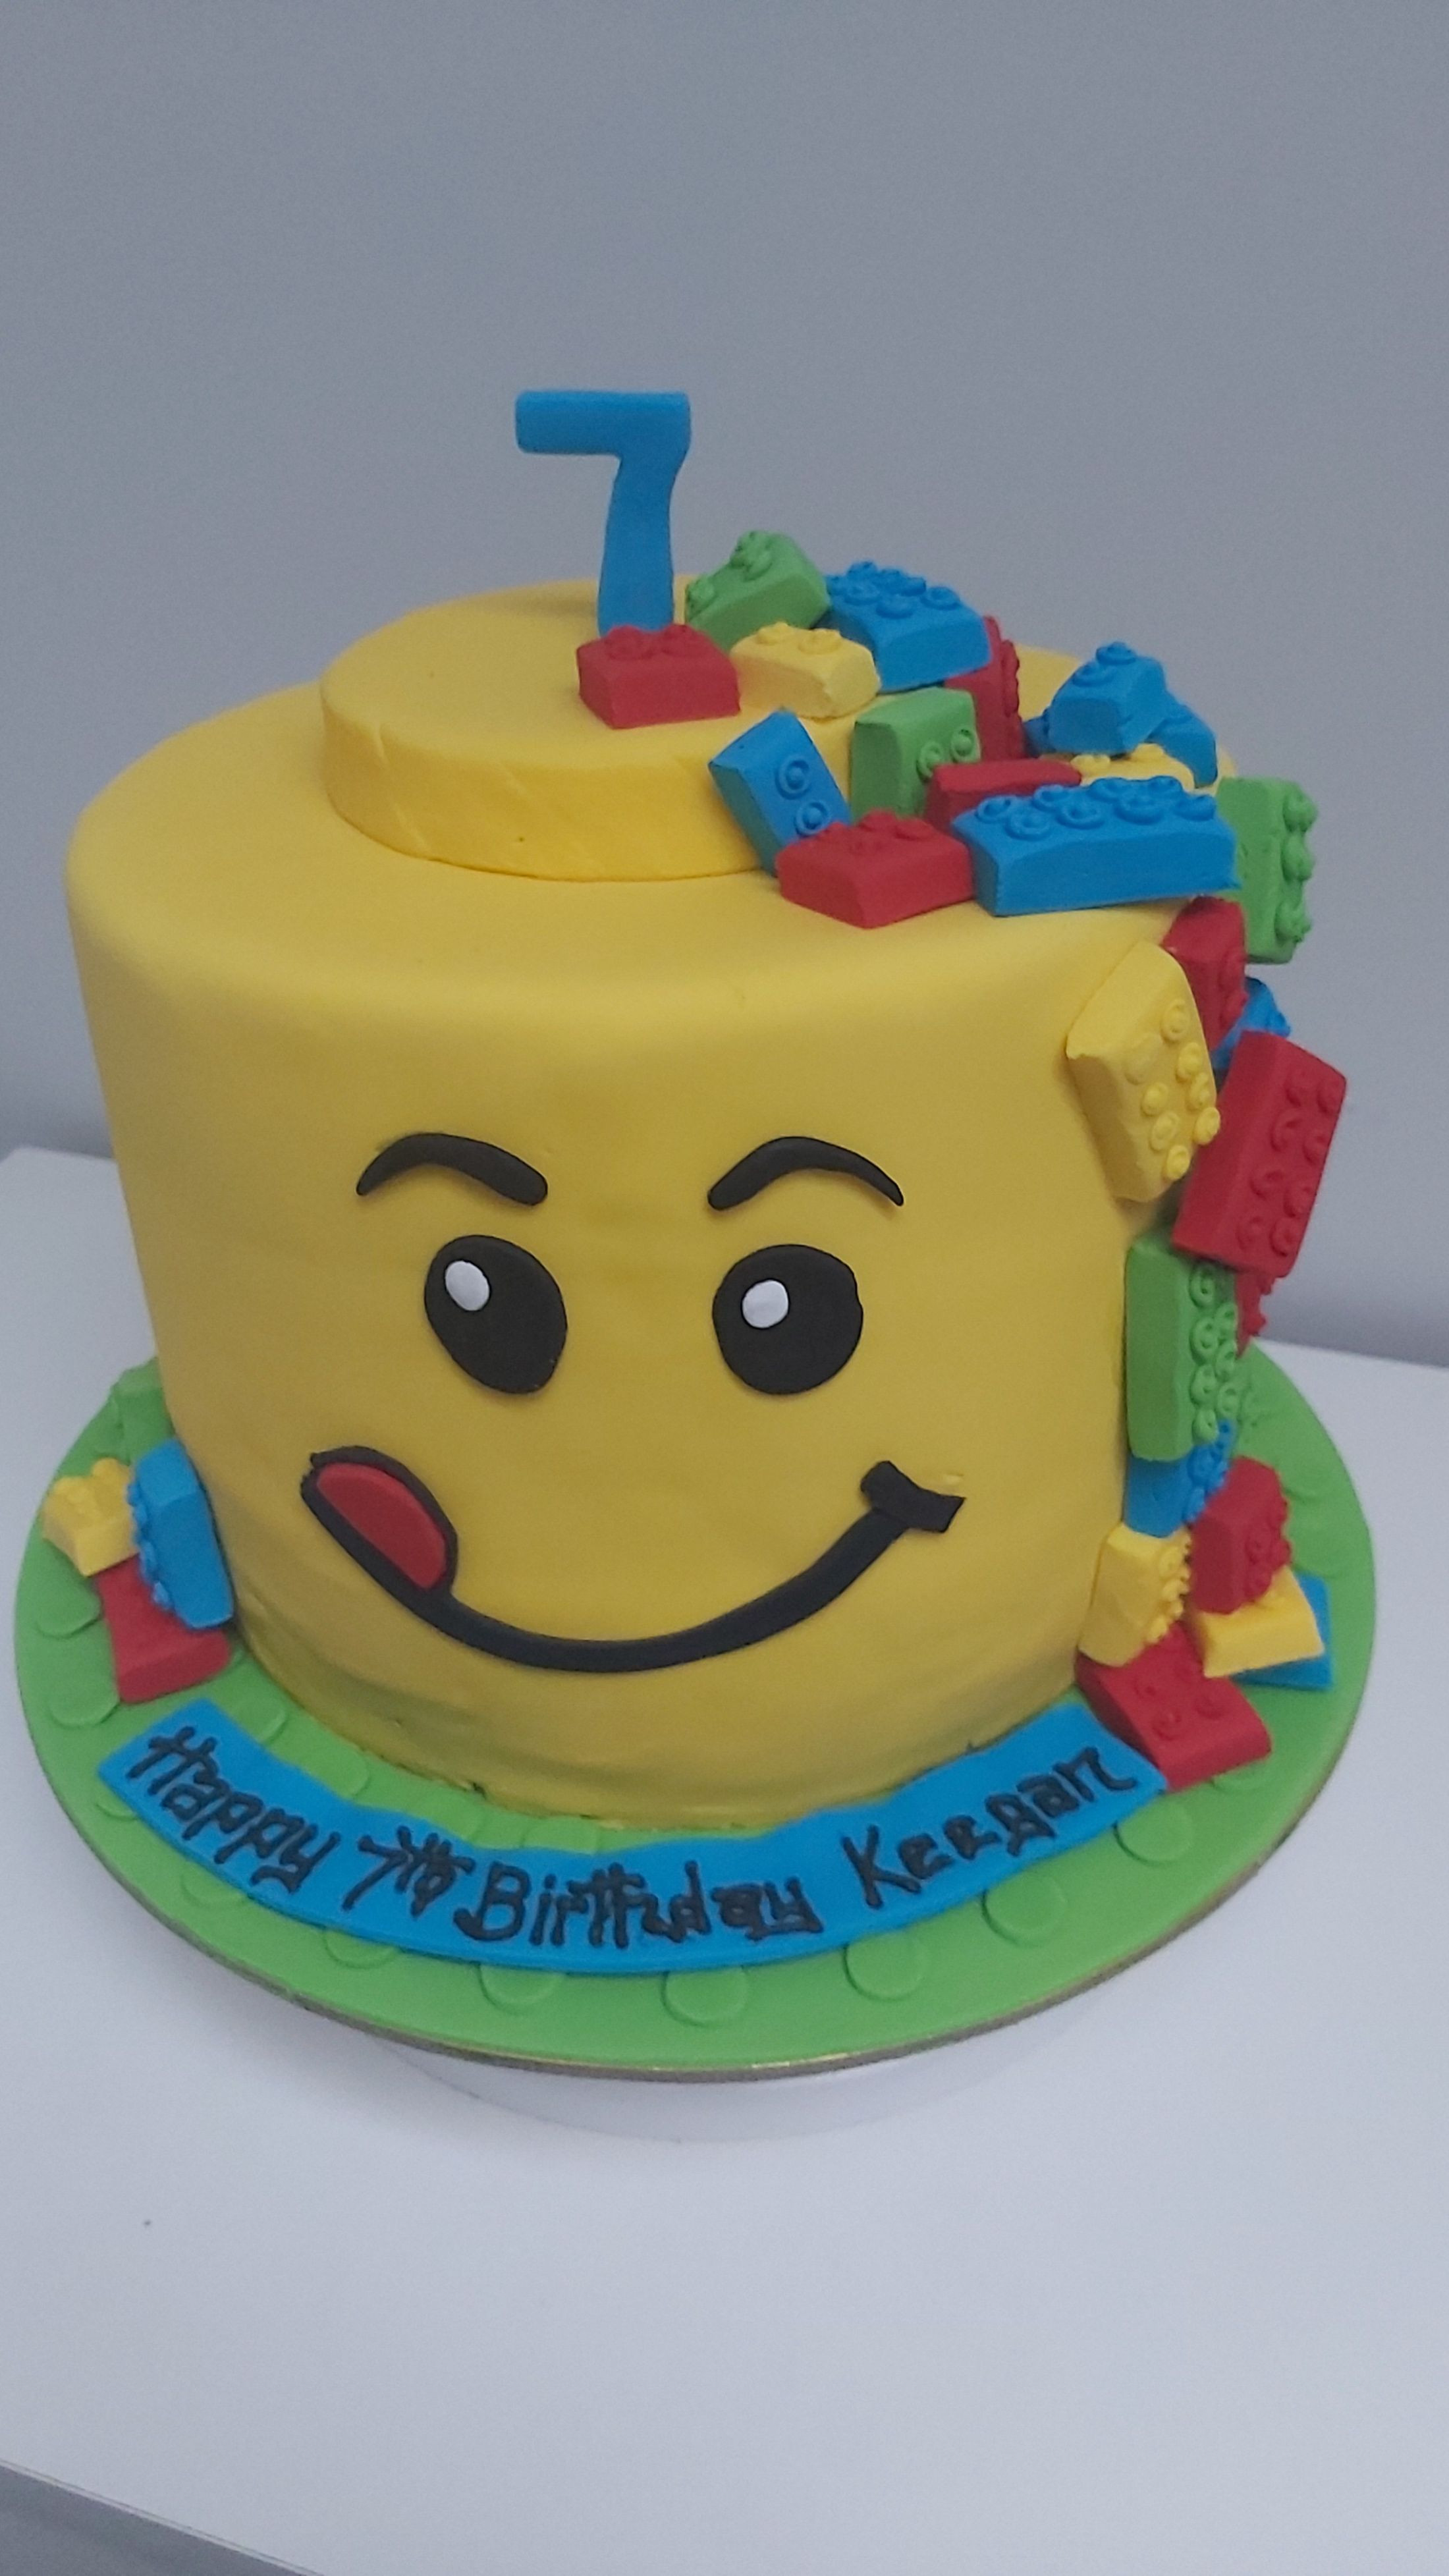 Cake Decorating - Decorate a Lego Cake